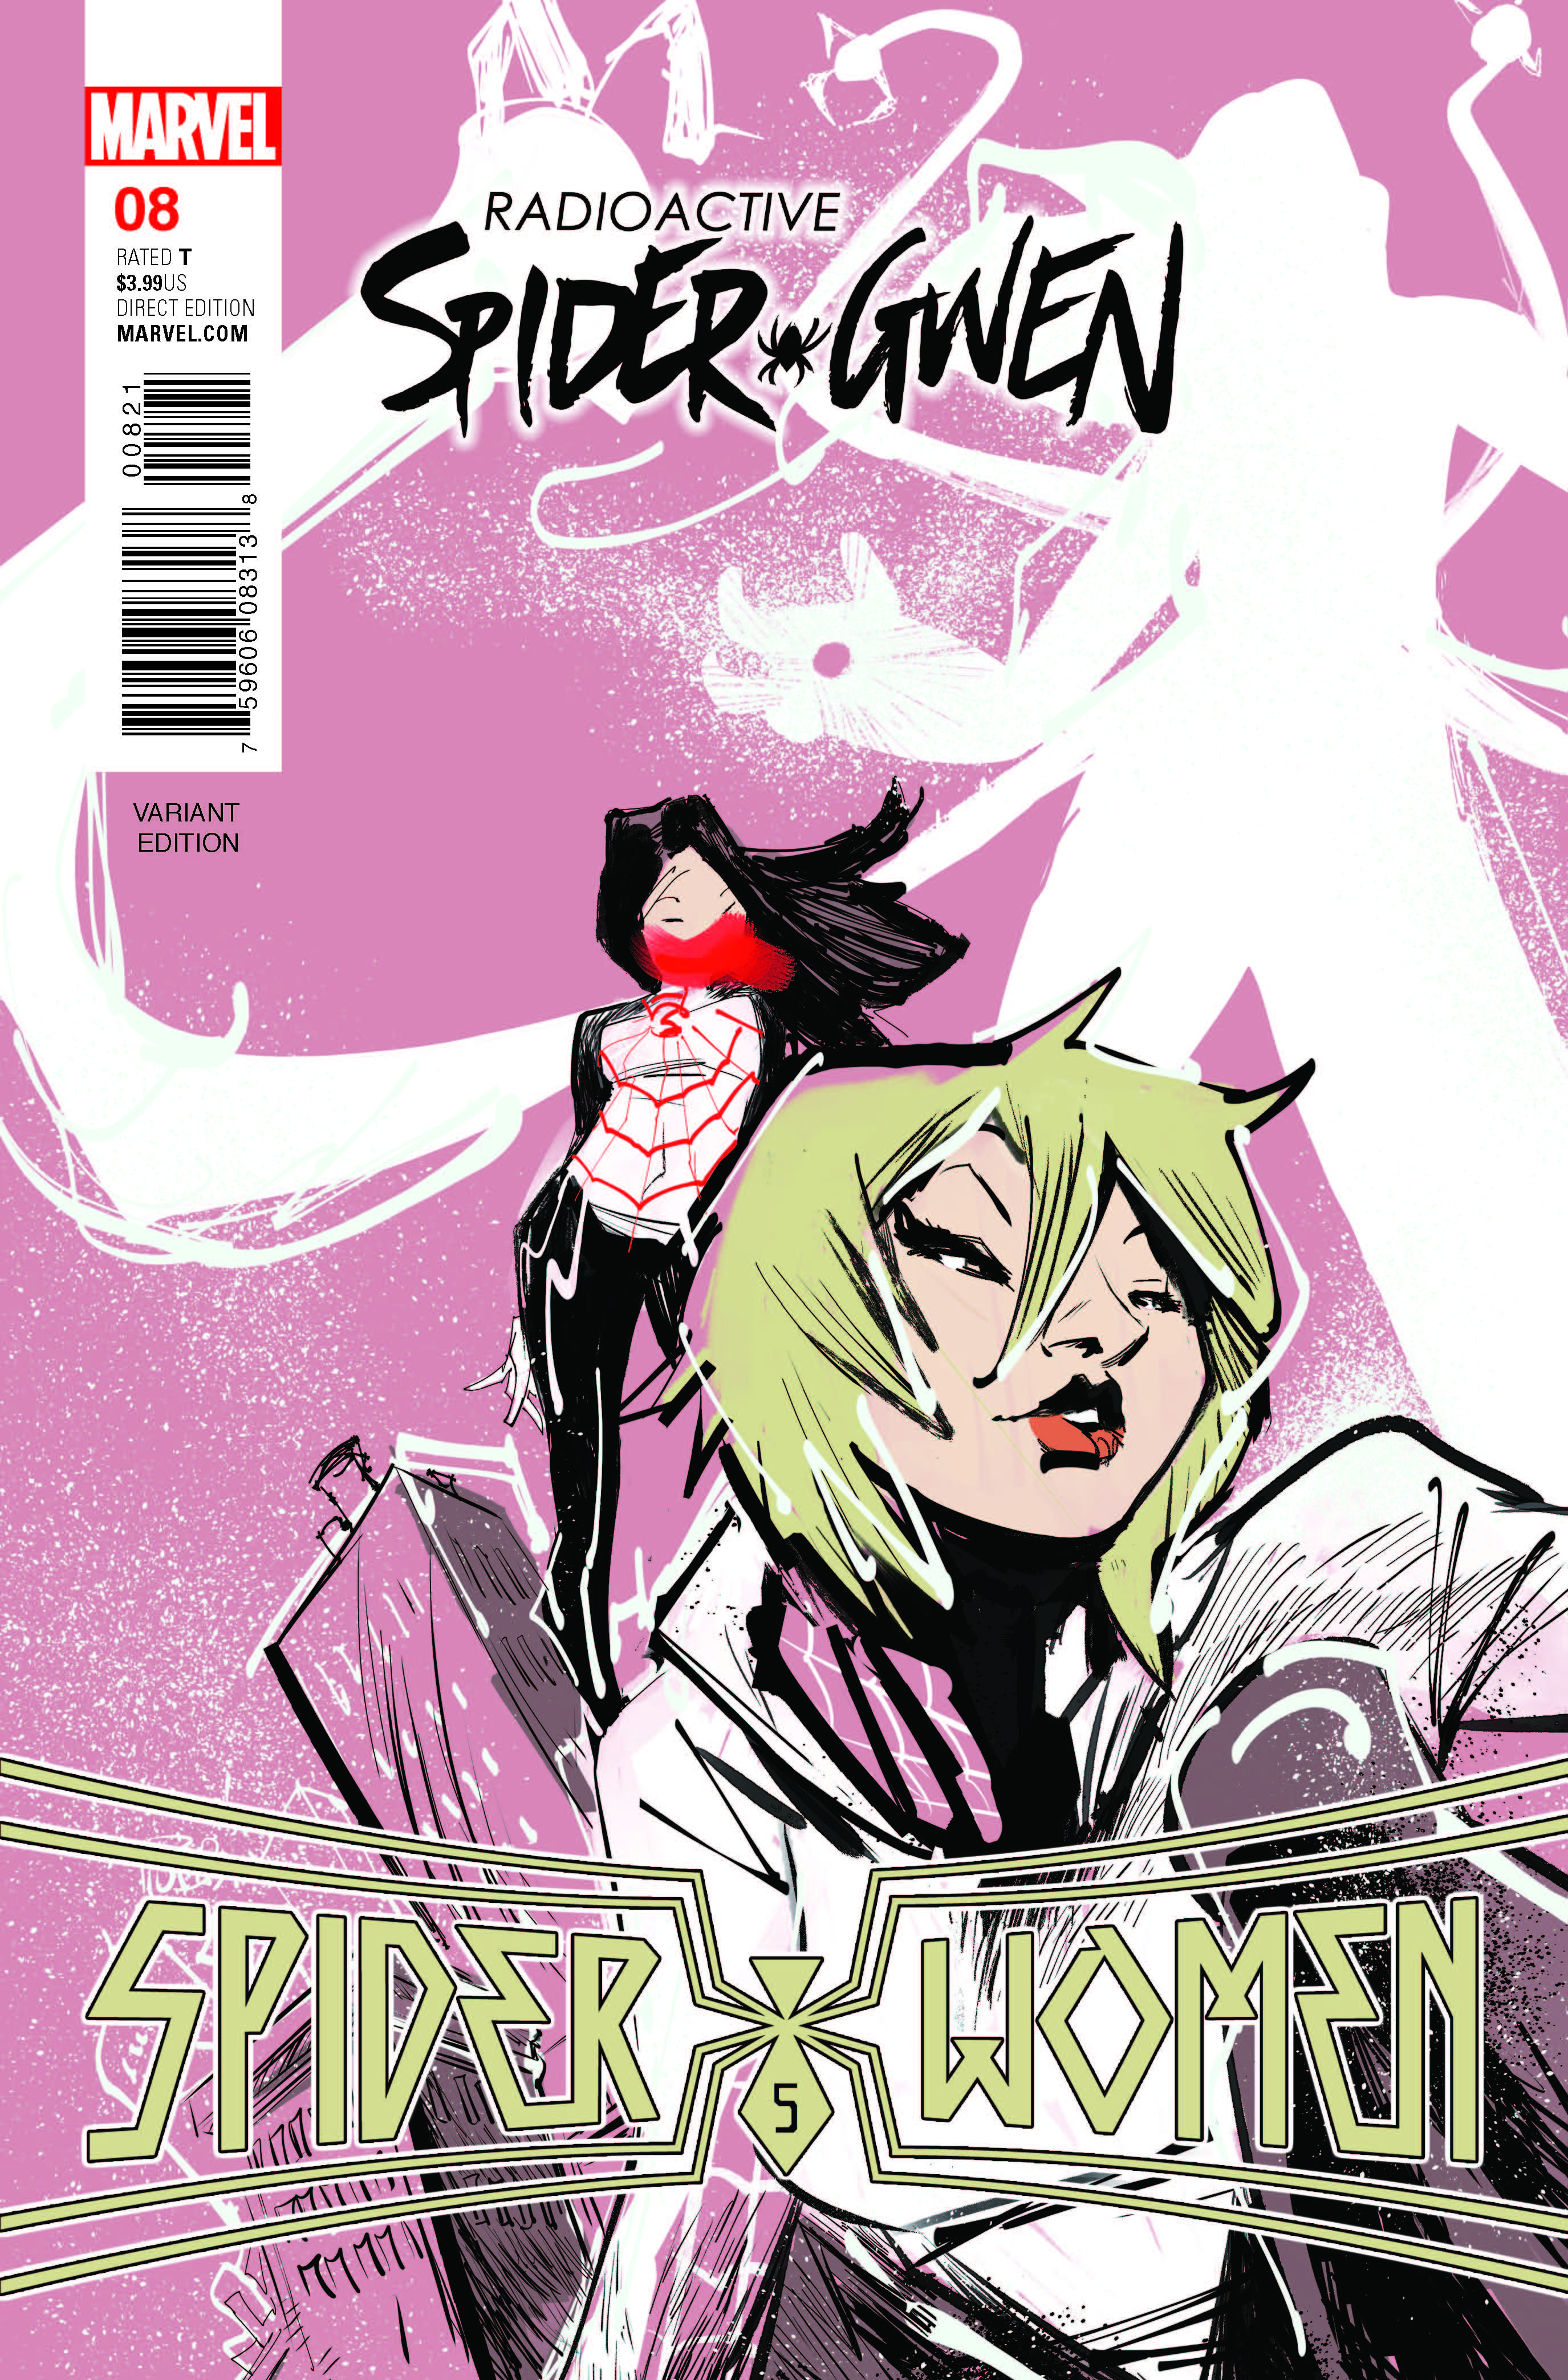 Marvel Preview: Radioactive Spider-Gwen #8